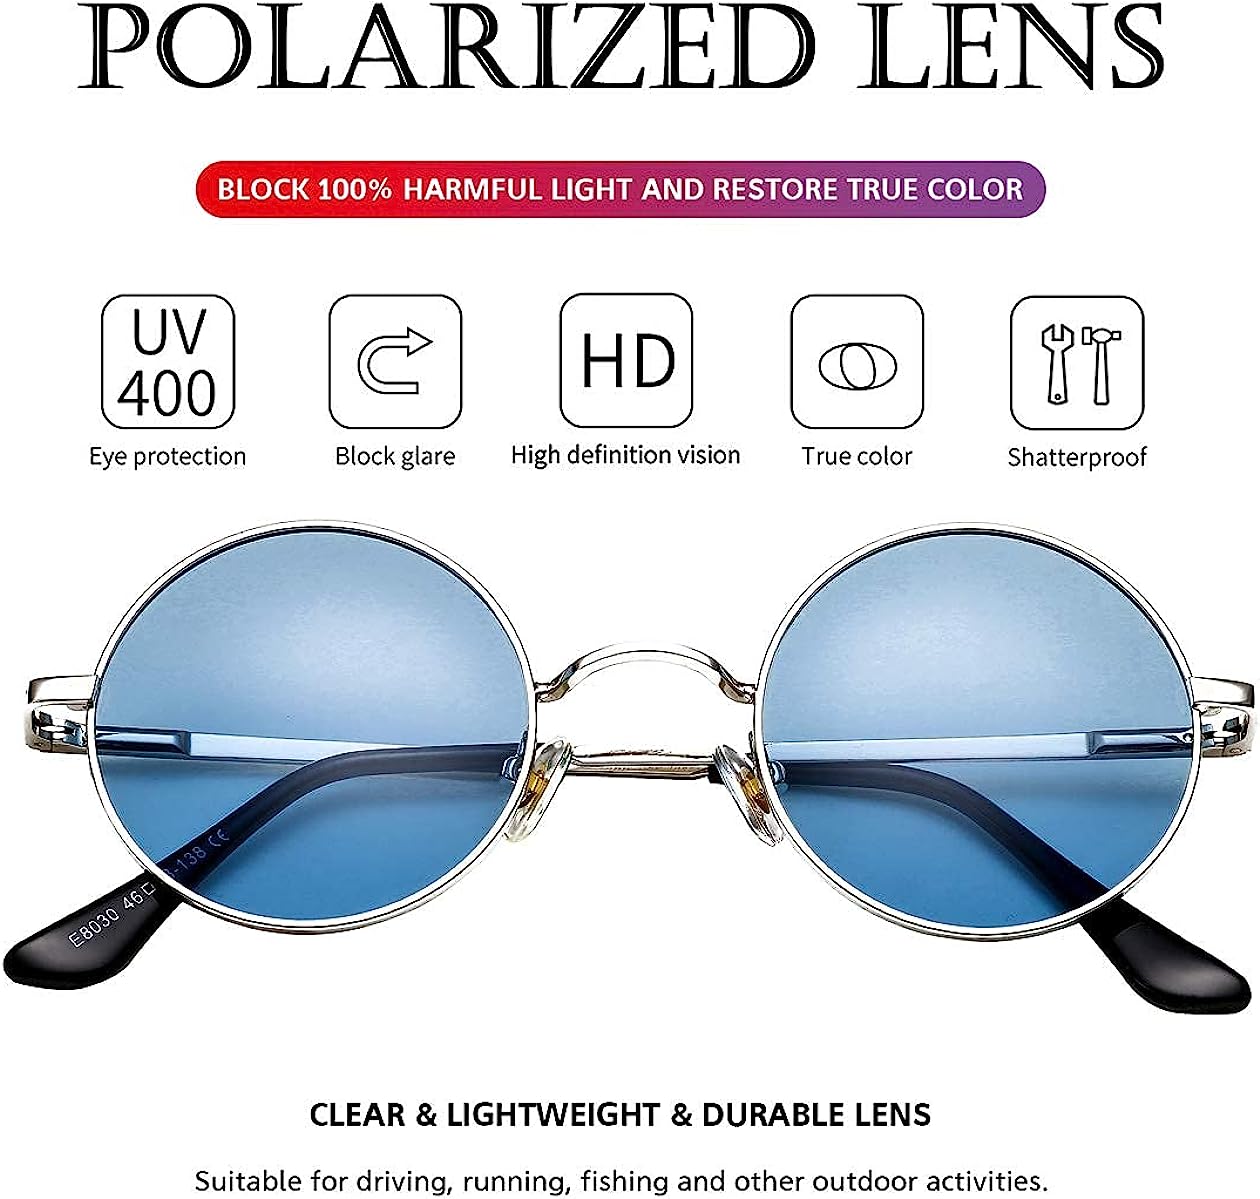 PORADAY Circle Lennon Glasses Retro Round Polarized Sunglasses Hippie Style Small Circle Sun Glasses